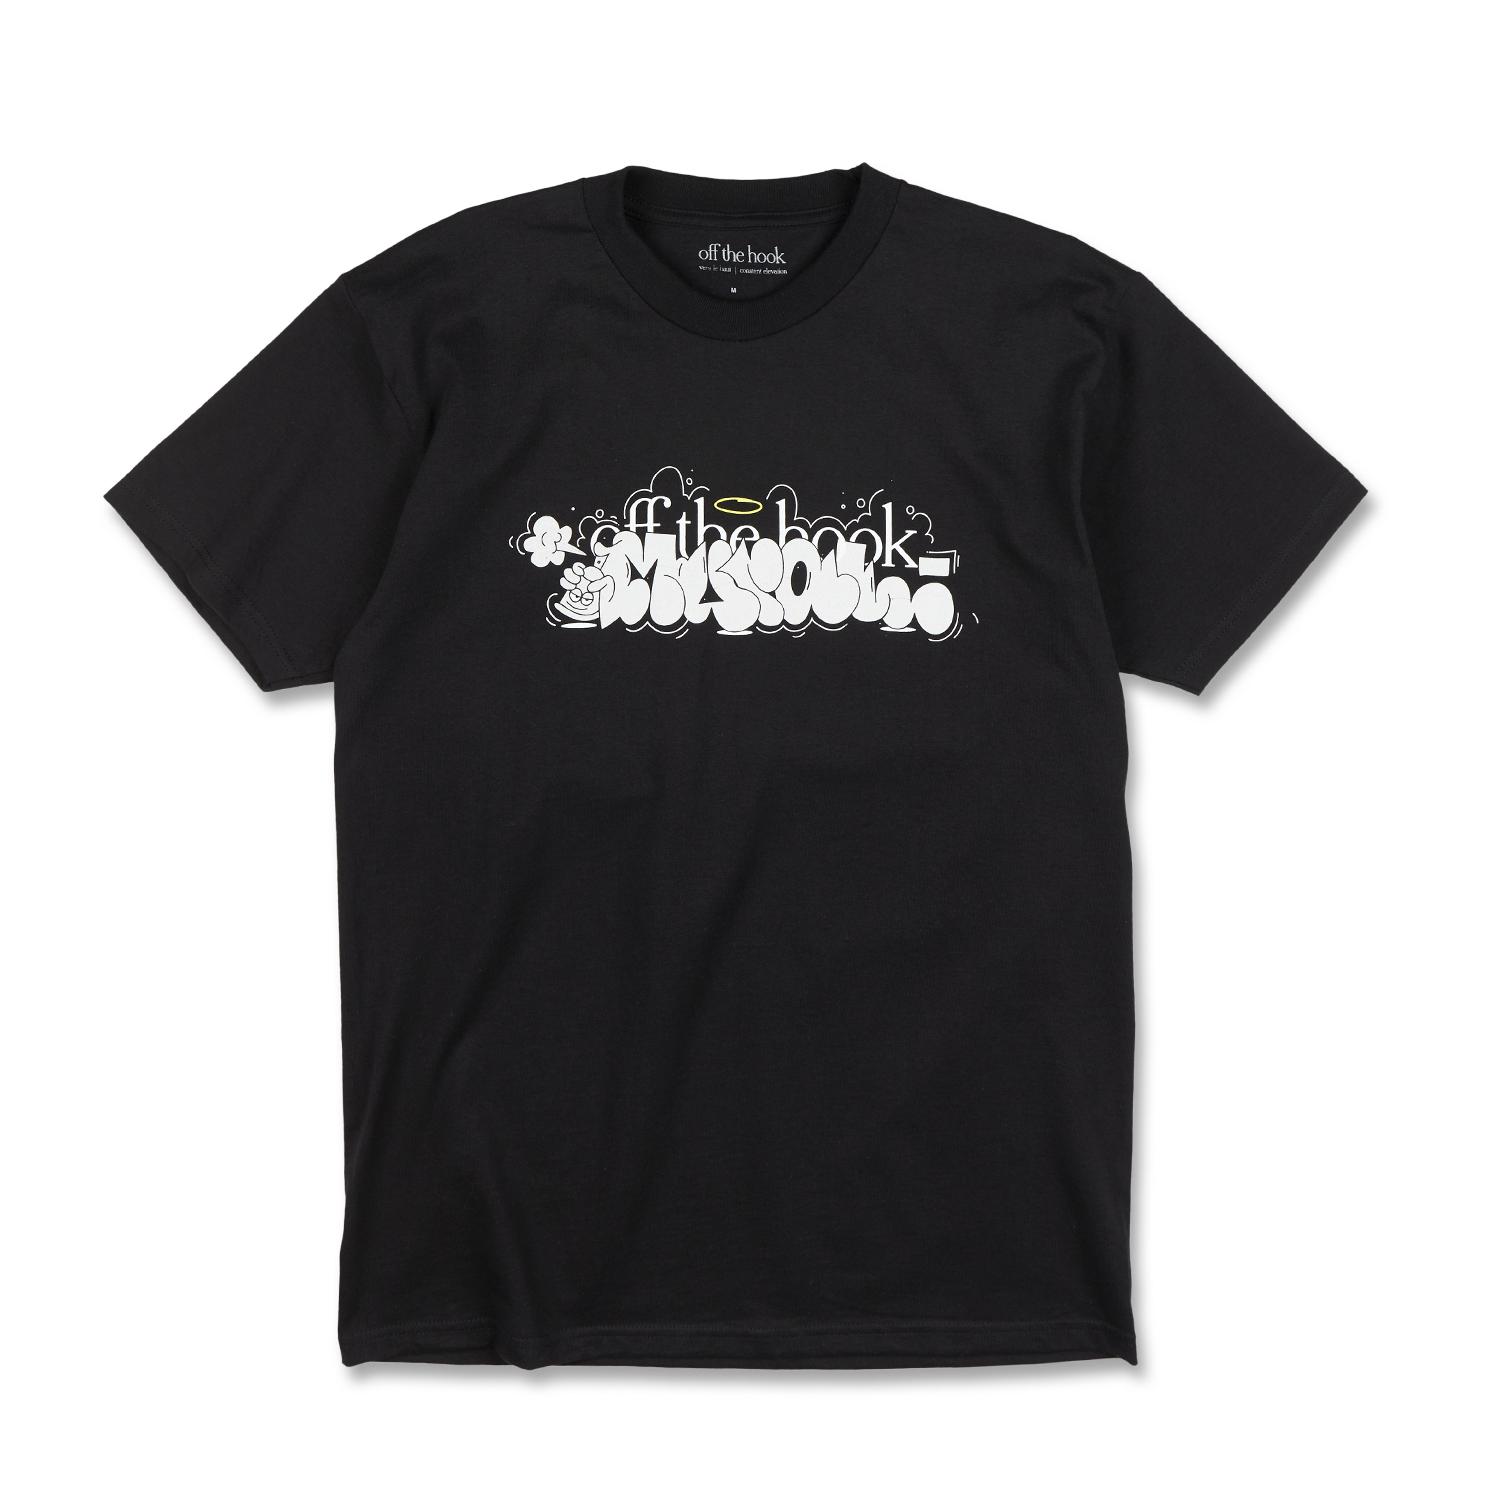 MURAL x Off The Hook Graffiti T-Shirt - Black